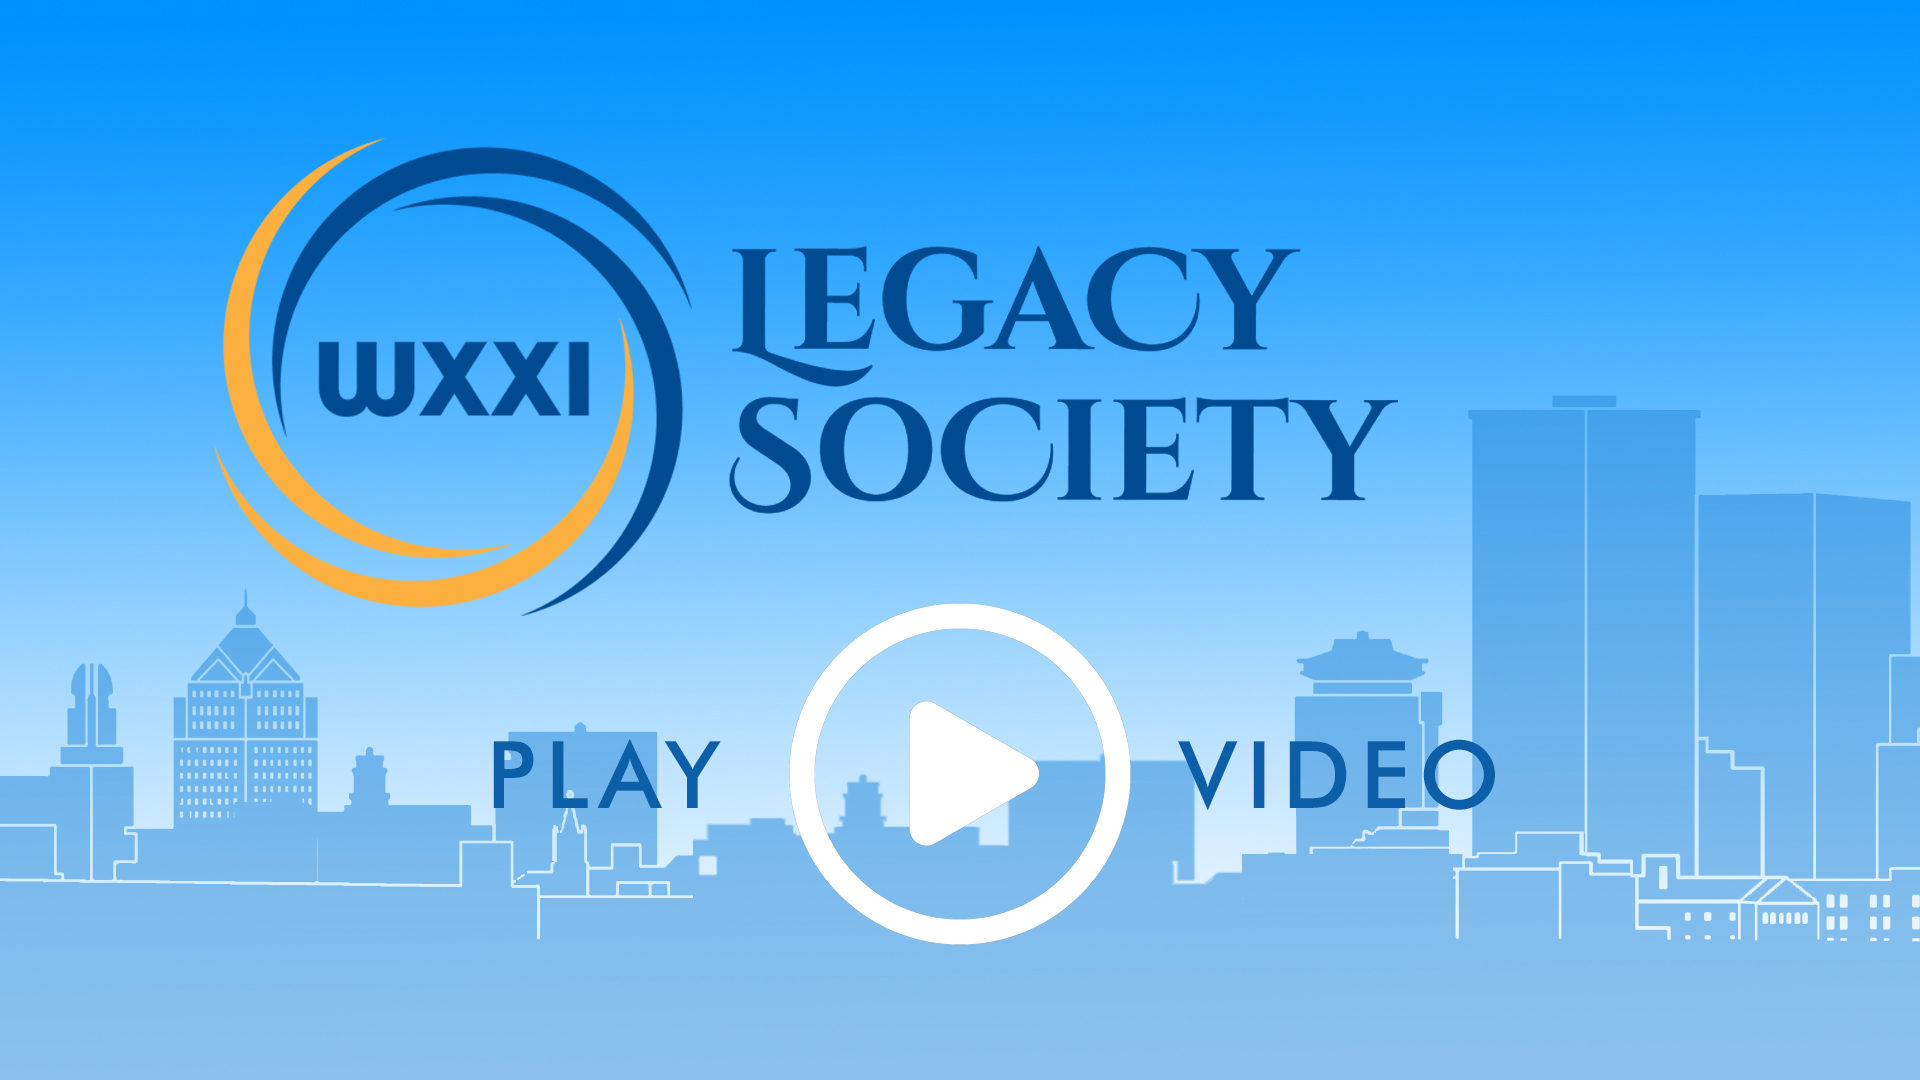 WXXI Legacy Society